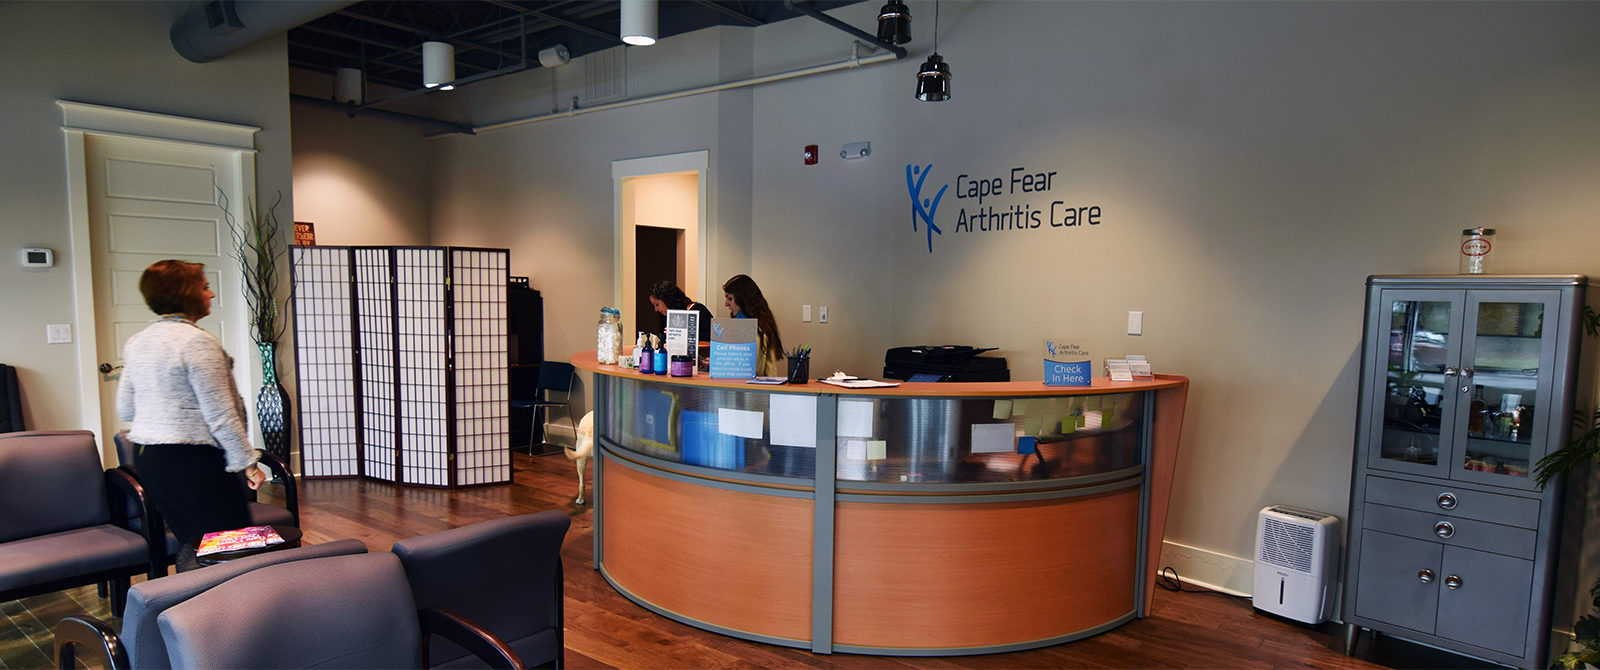 Cape Fear Arthritis Care - Wilmington NC - Leland NC